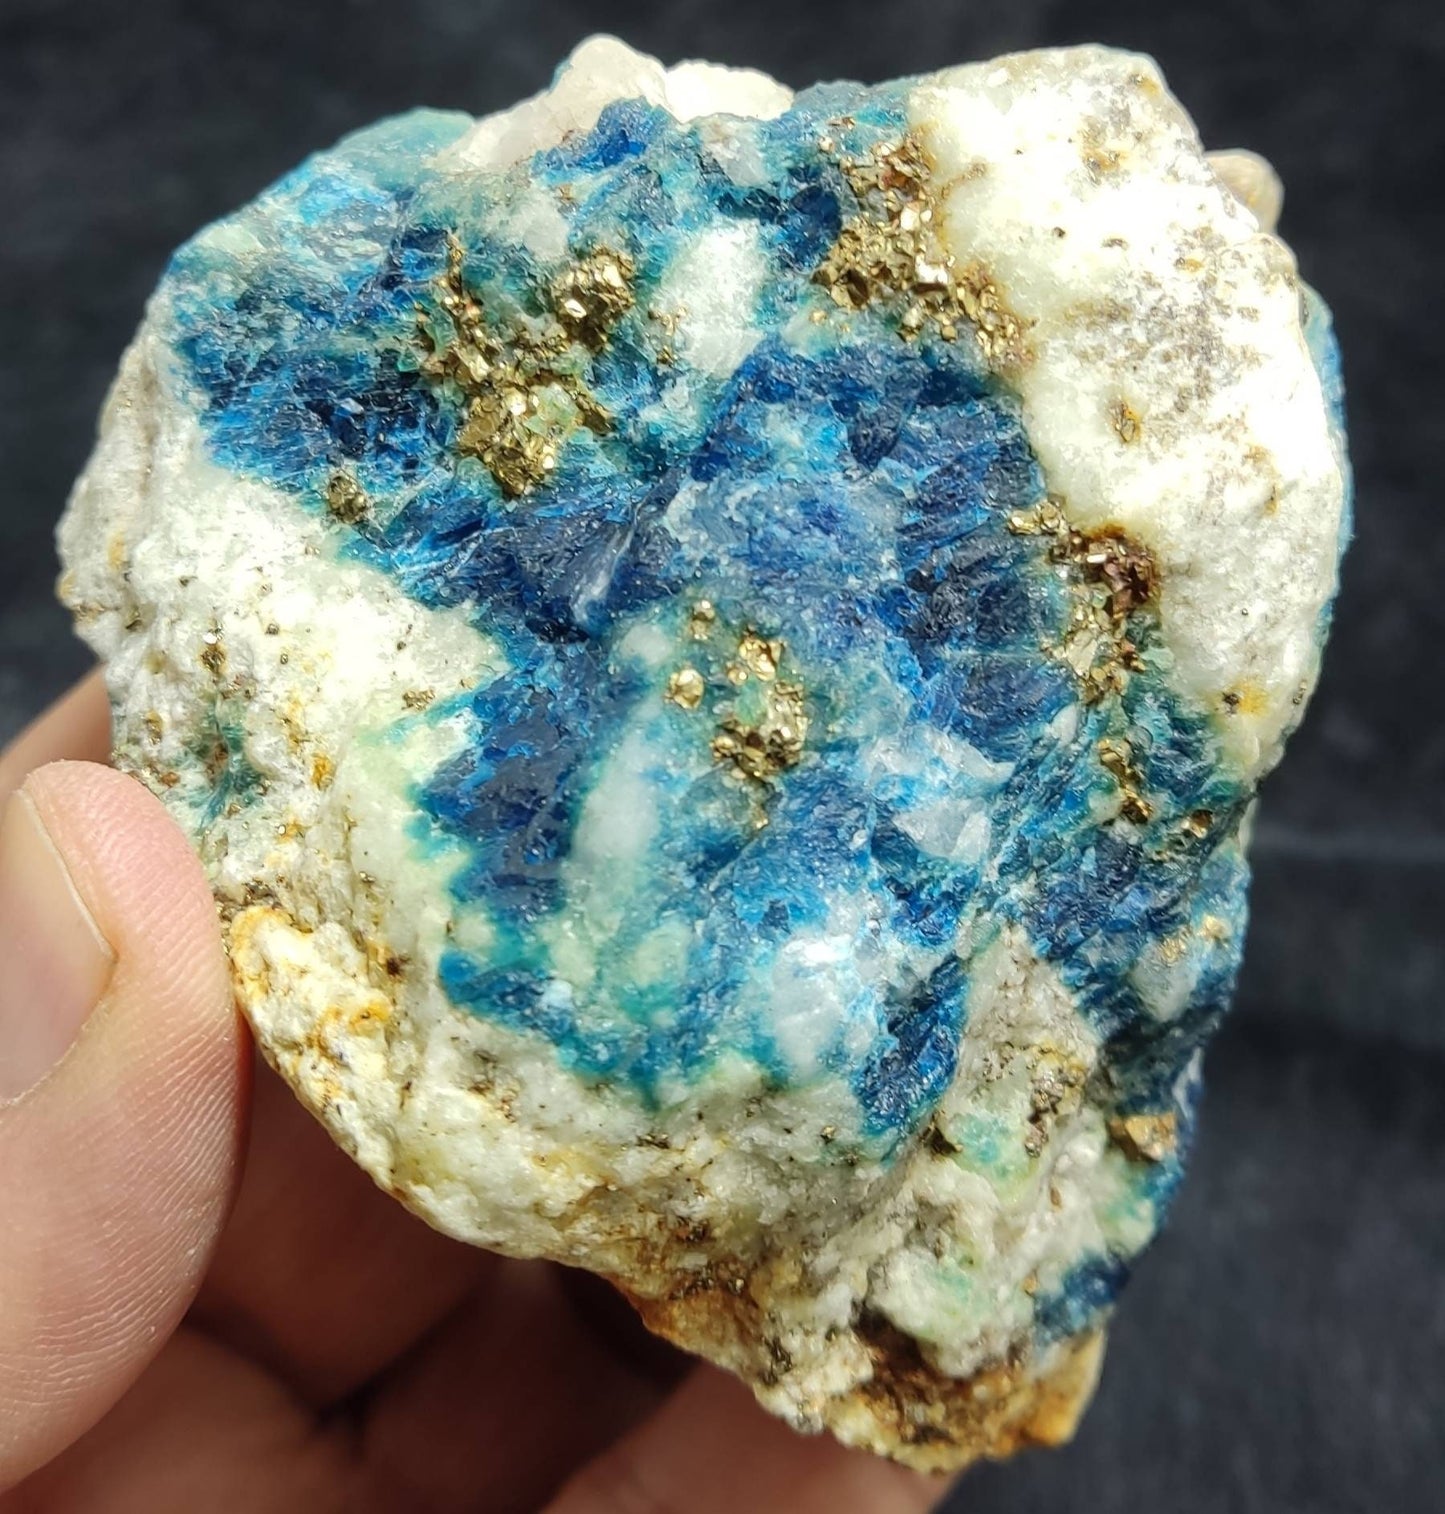 Fluorescent Minerals Lazurite in matrix with pyrite rough specimen 415 grams